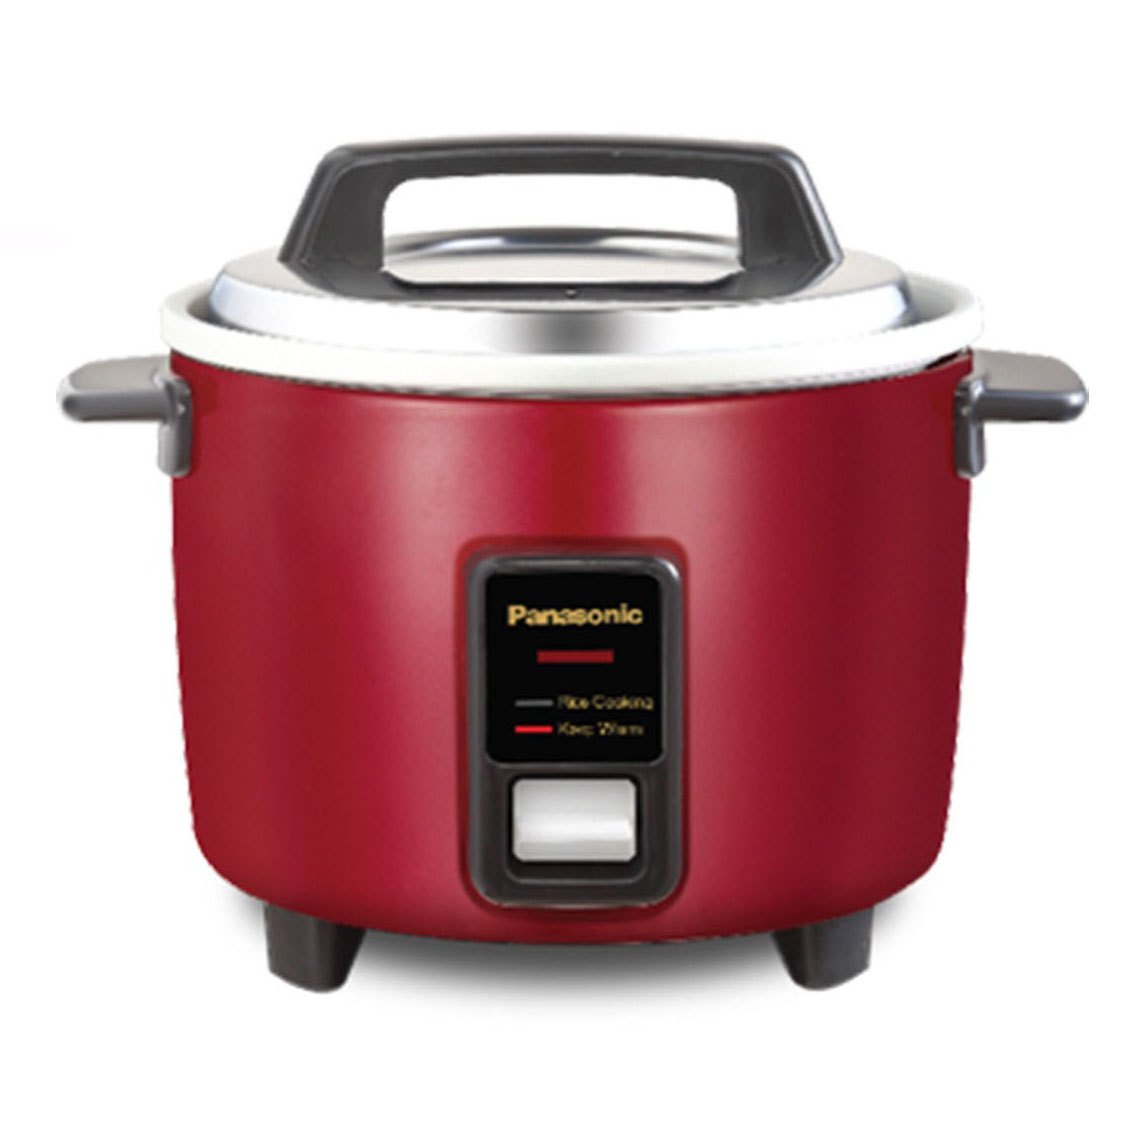 Panasonic Rice Cooker SR-Y10 (Red)